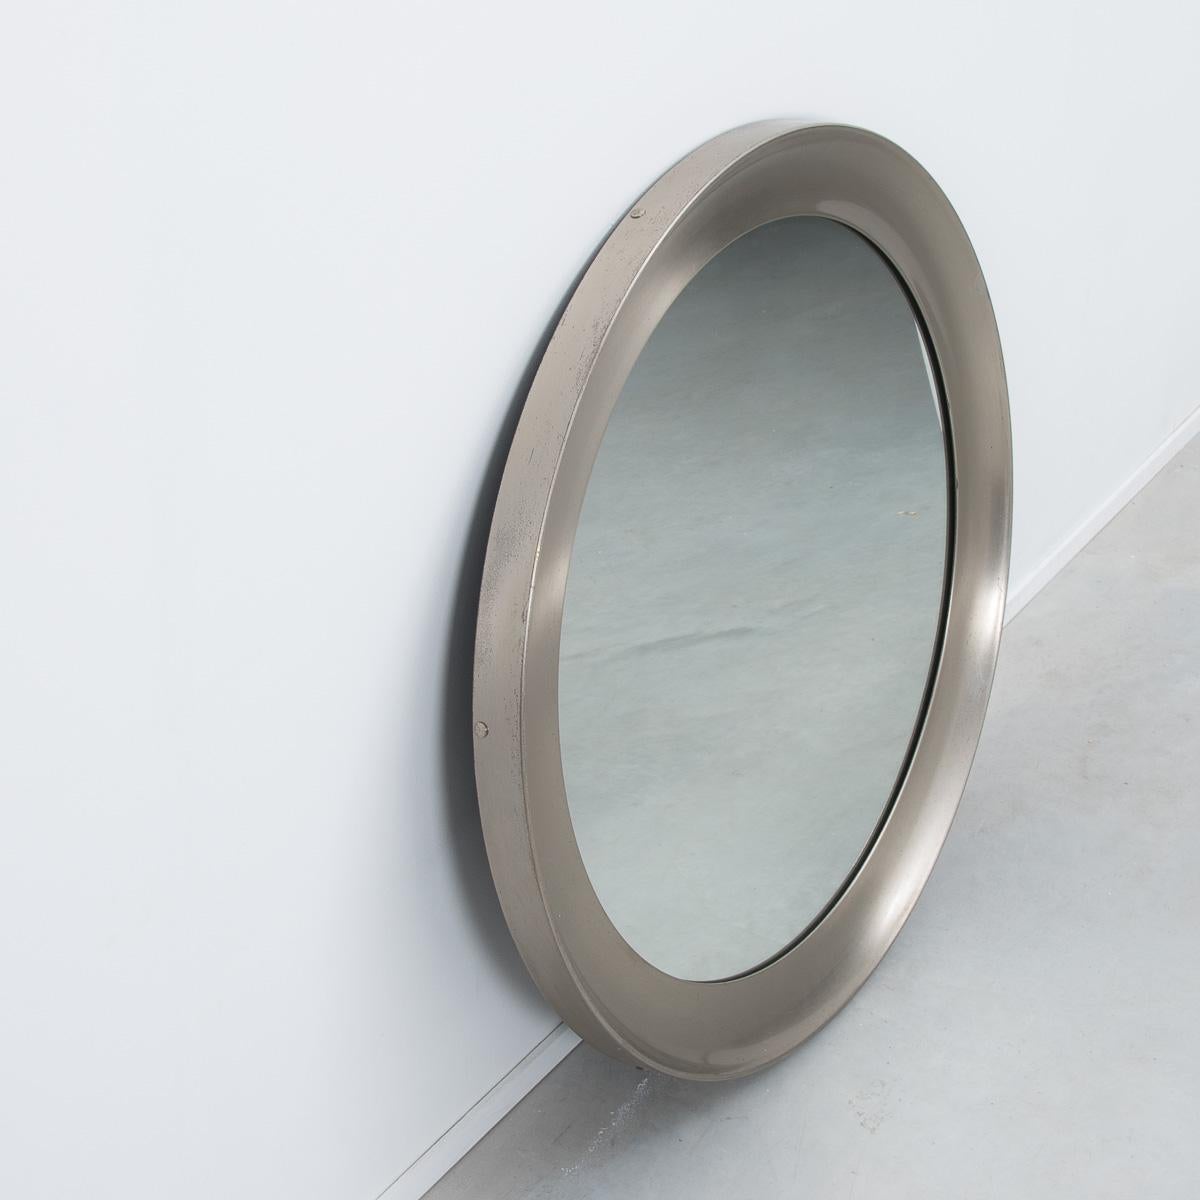 Italian Sergio Mazza Narcisso Round Nickel Mirror Artemide, Italy, 1960